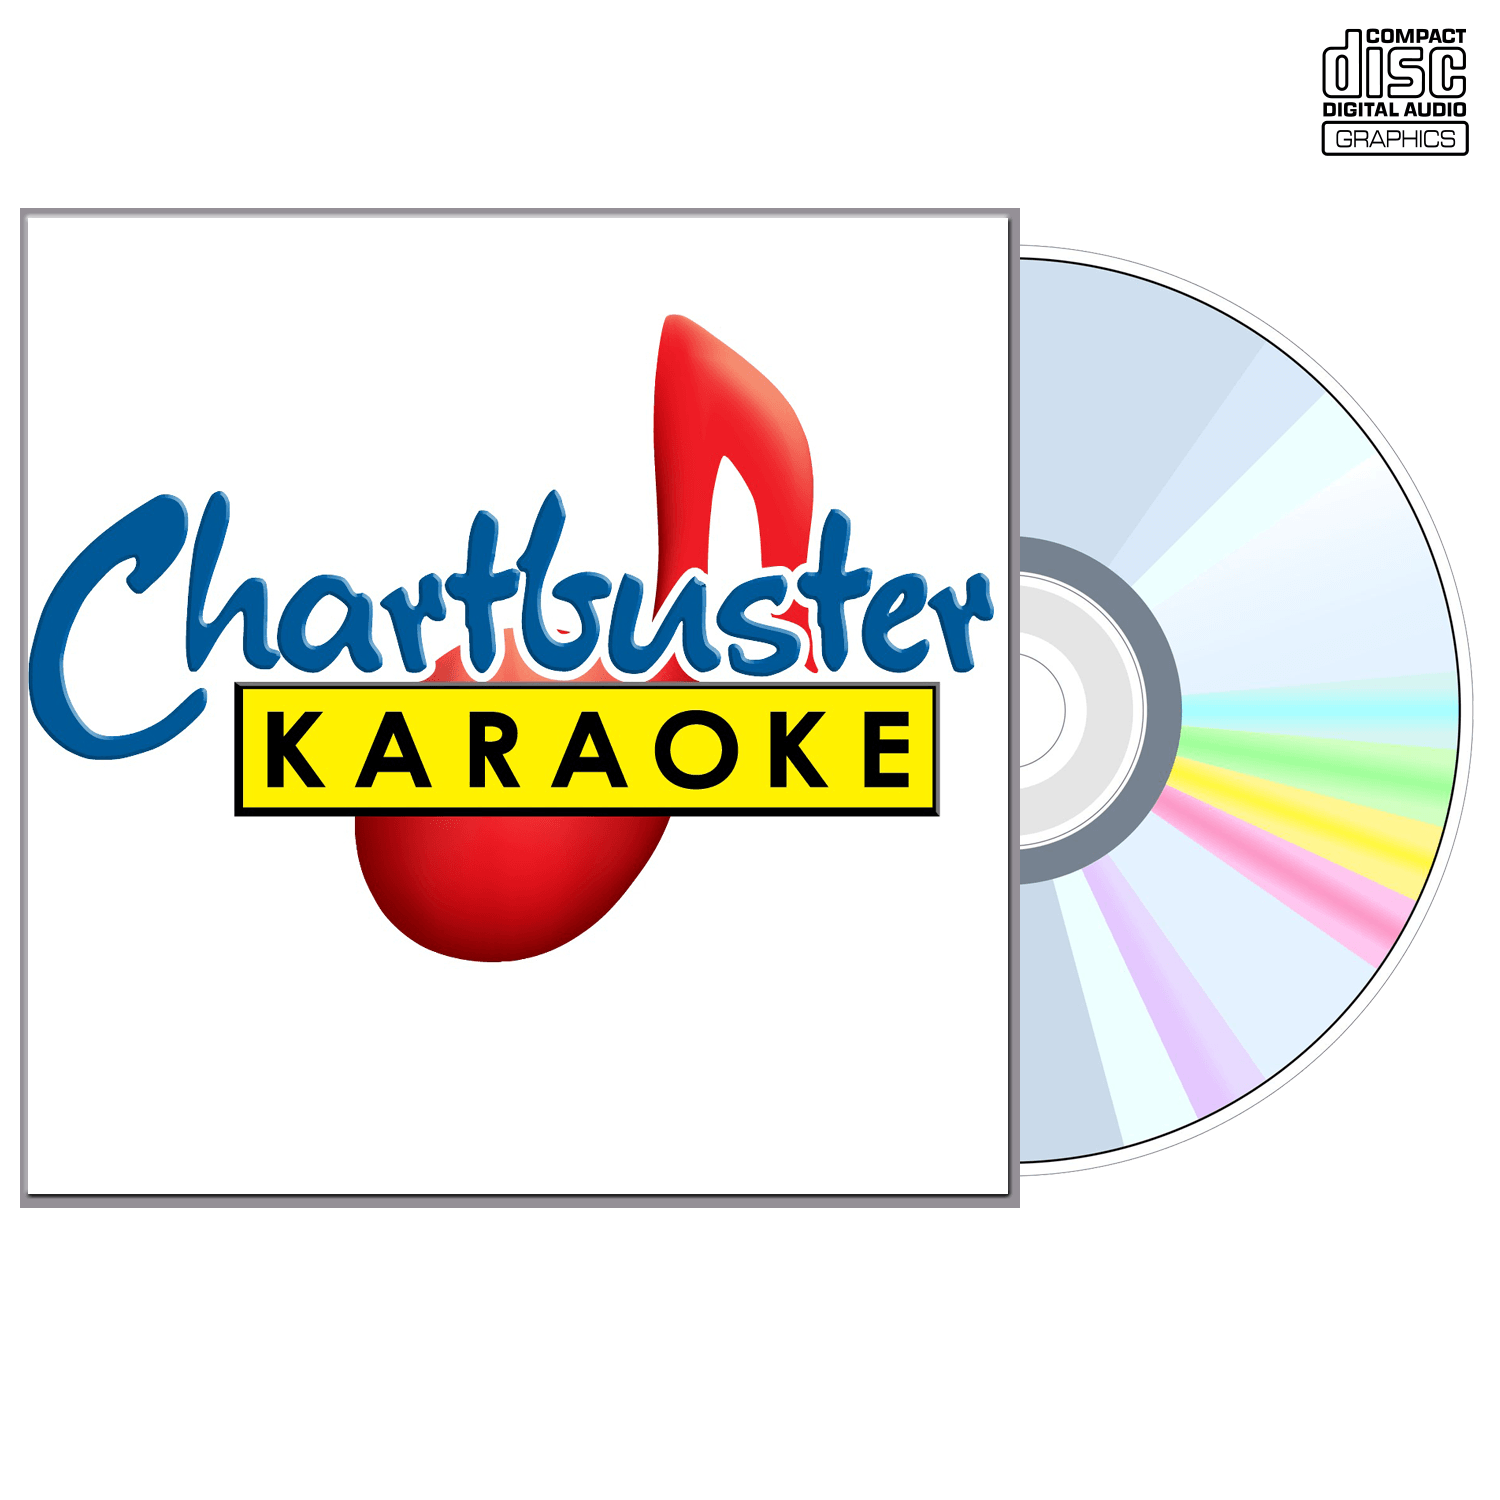 Zac Brown - CD+G - Chartbuster Karaoke - Karaoke Home Entertainment